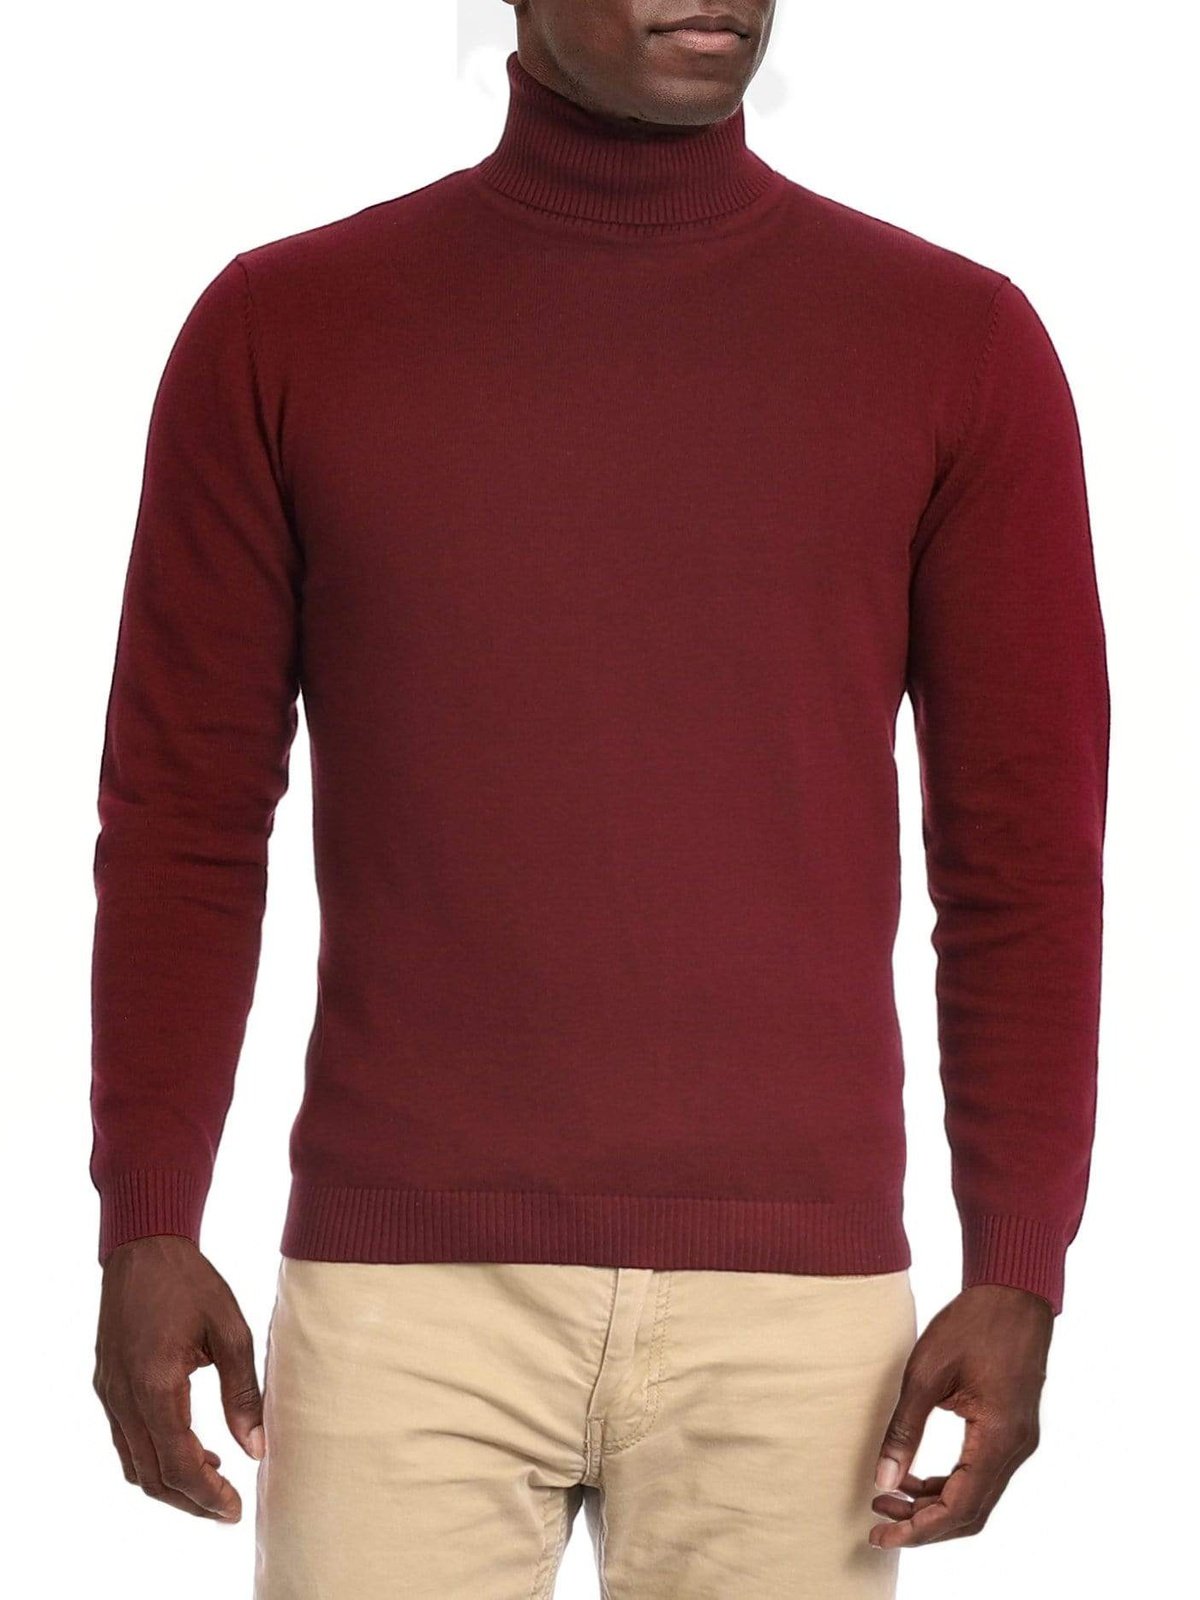 Arthur Black SWEATERS Arthur Black Men&#39;s Solid Burgundy Pullover Cotton Blend Turtleneck Sweater Shirt